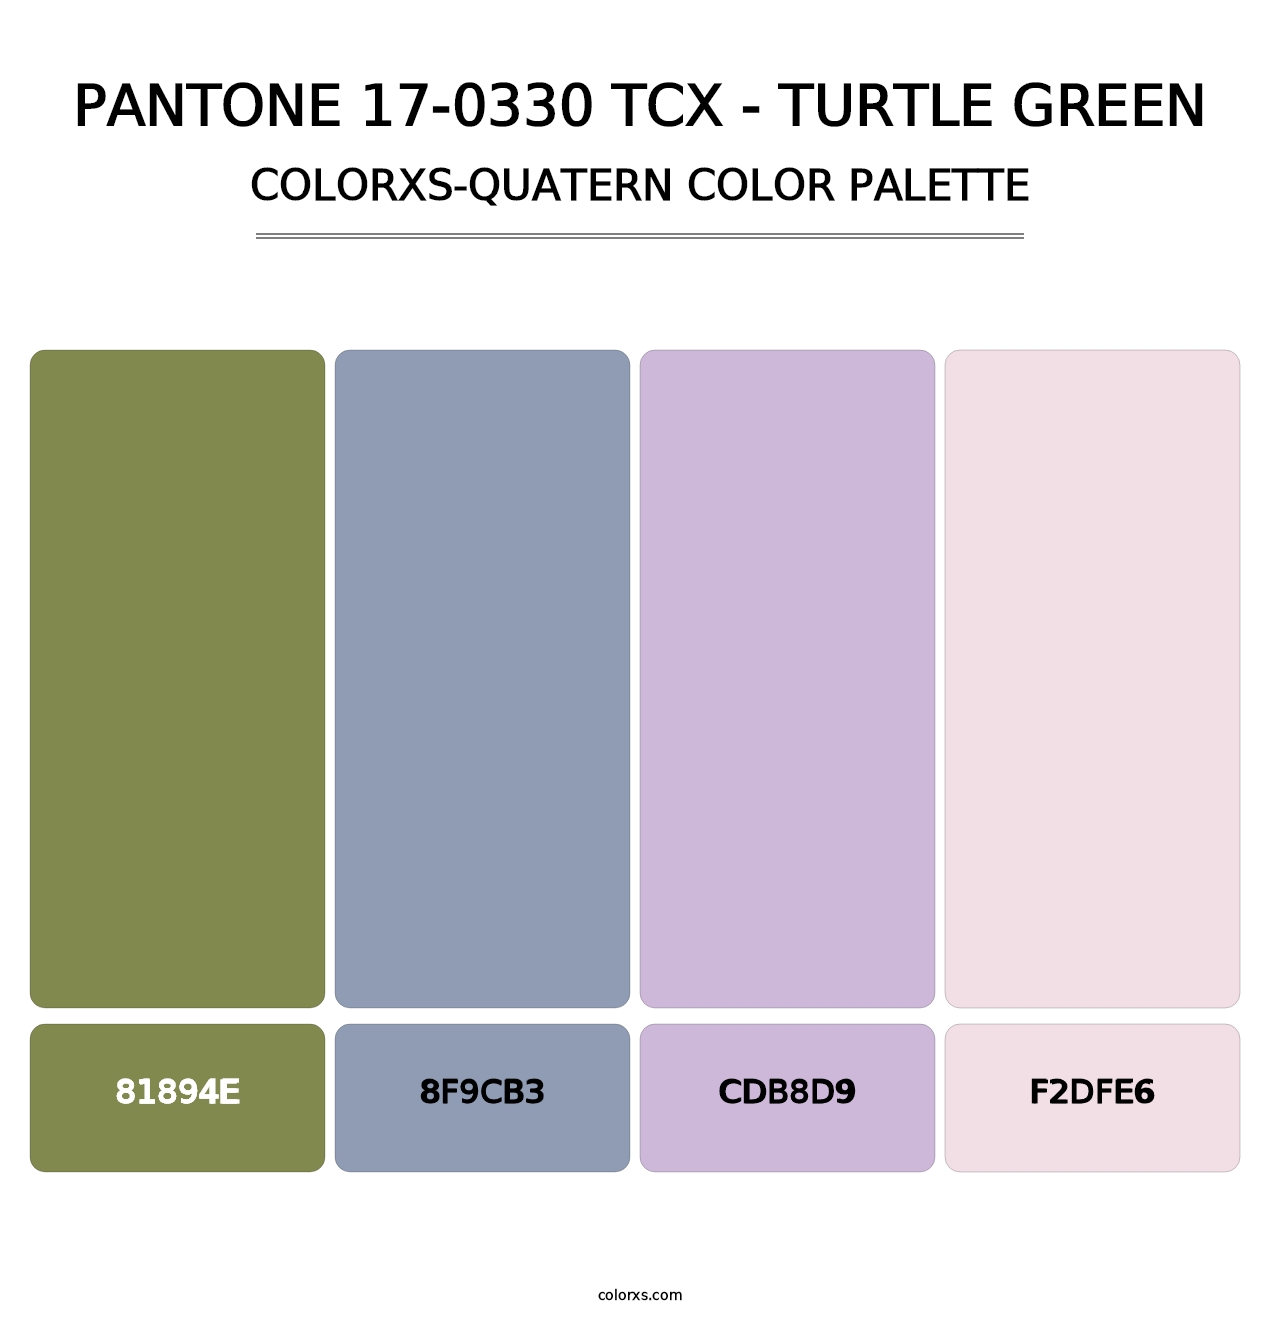 PANTONE 17-0330 TCX - Turtle Green - Colorxs Quatern Palette